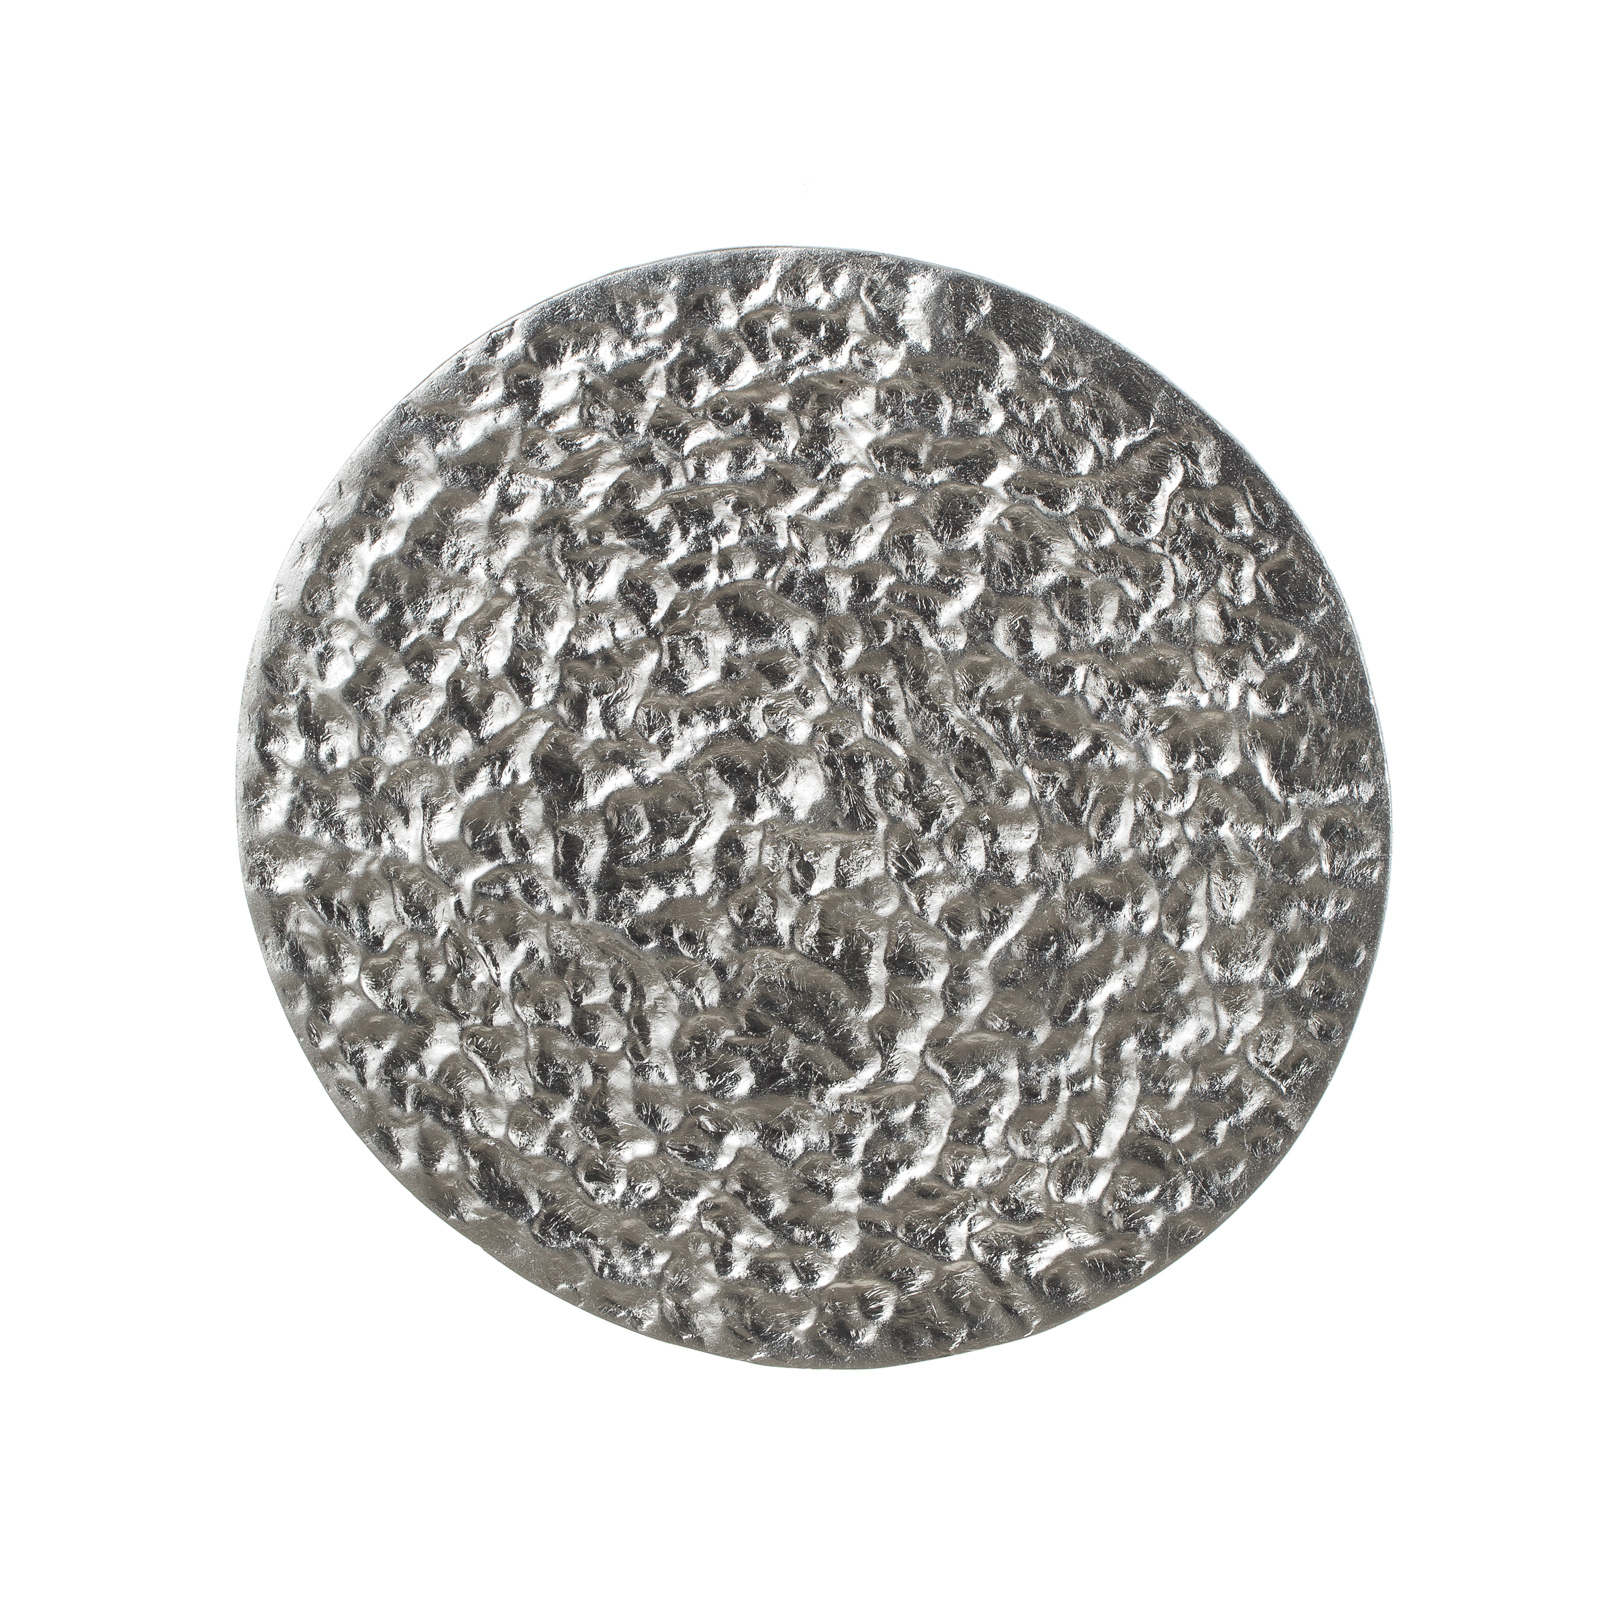 LED wall light Meteor, Ø 27 cm, silver